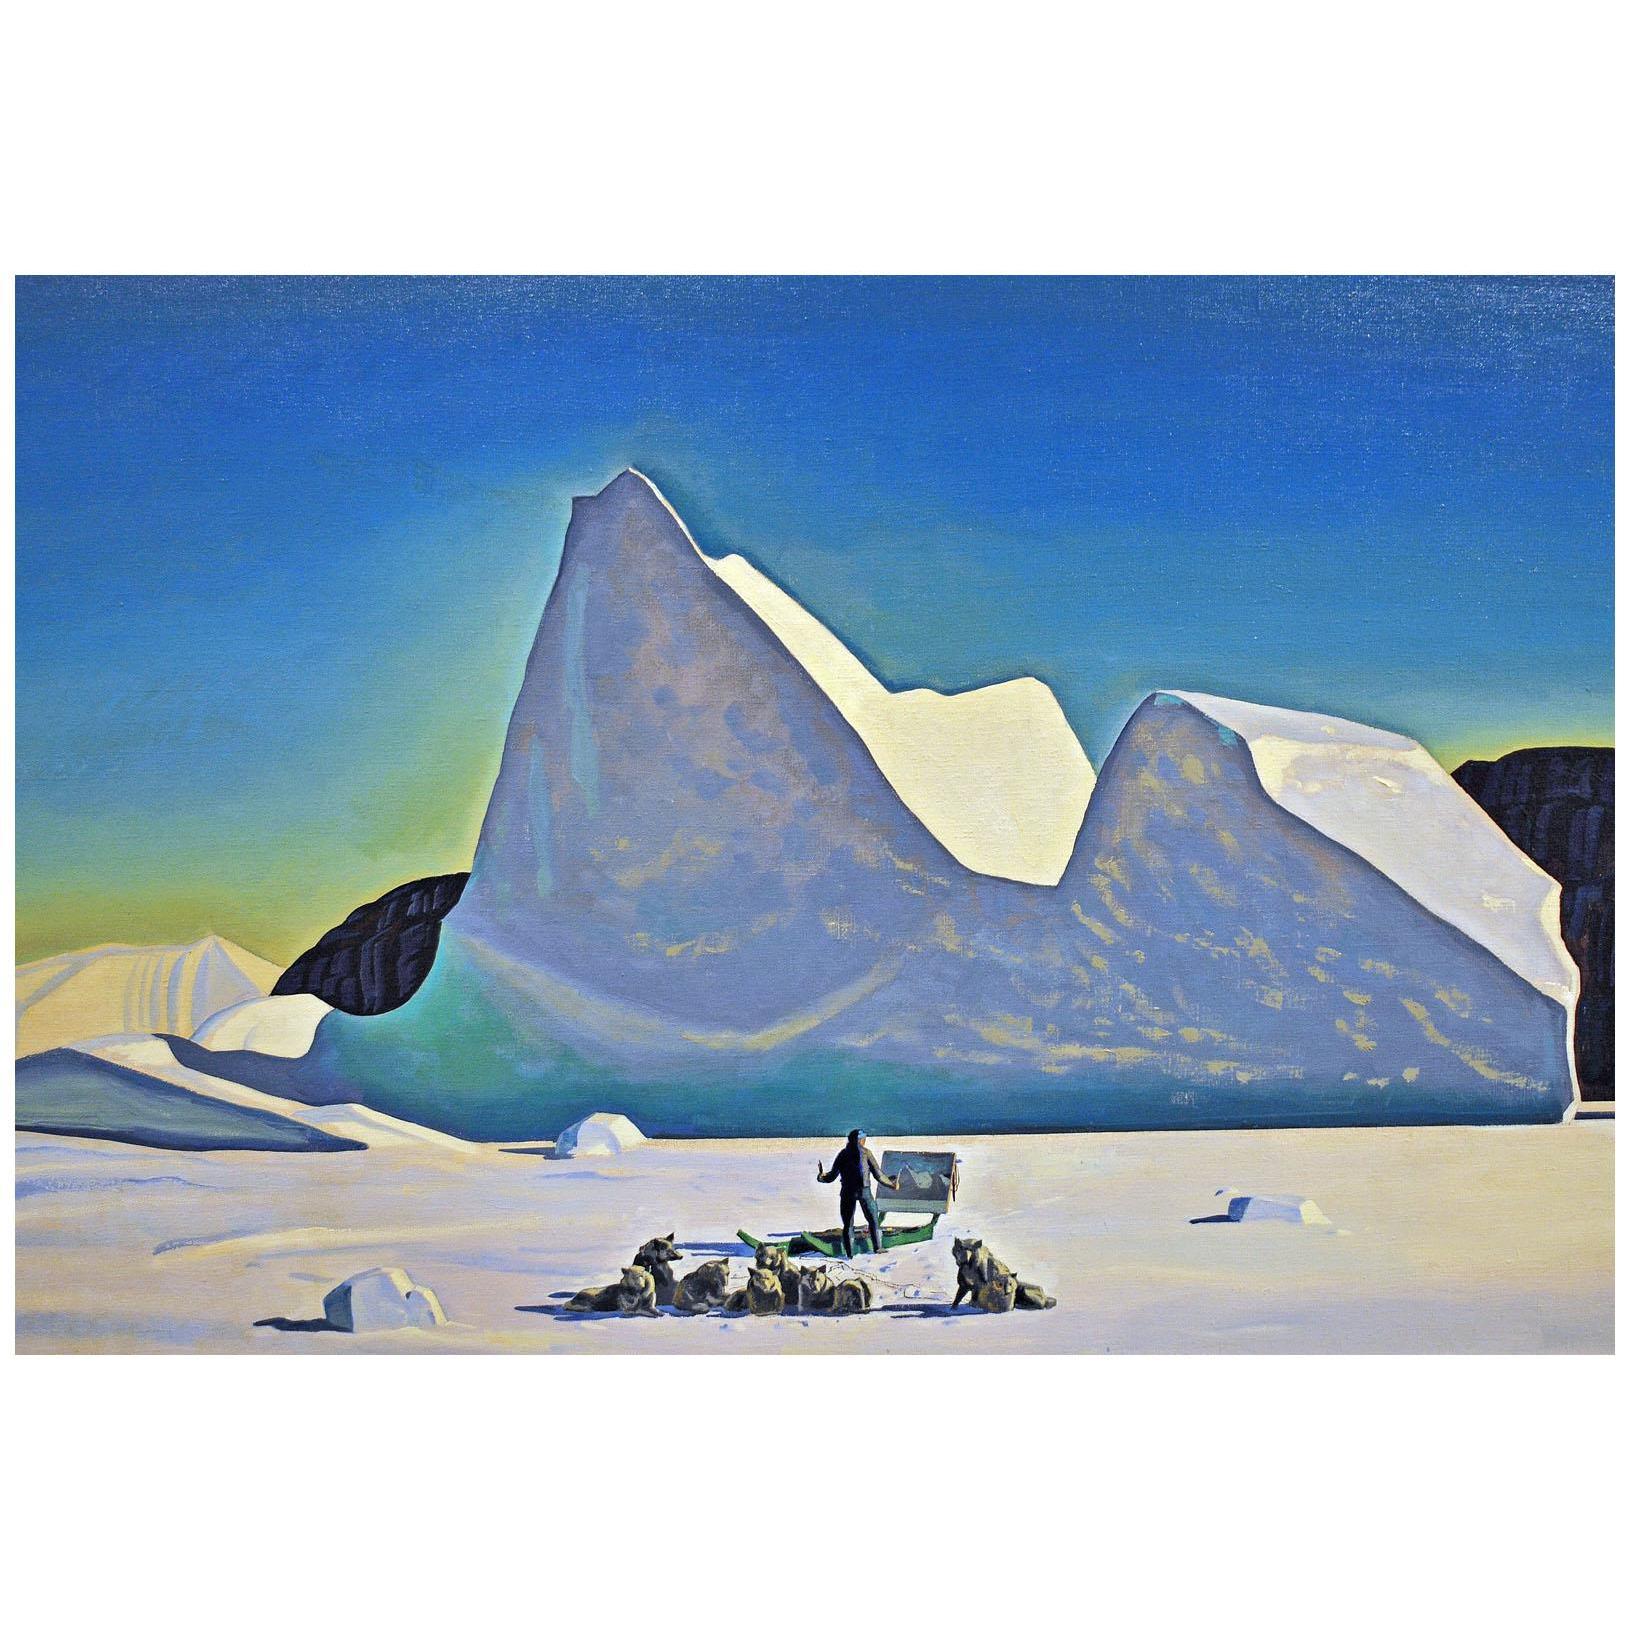 Rockwell Kent. Painter in Greenland. 1930. Baltimore Art Museum